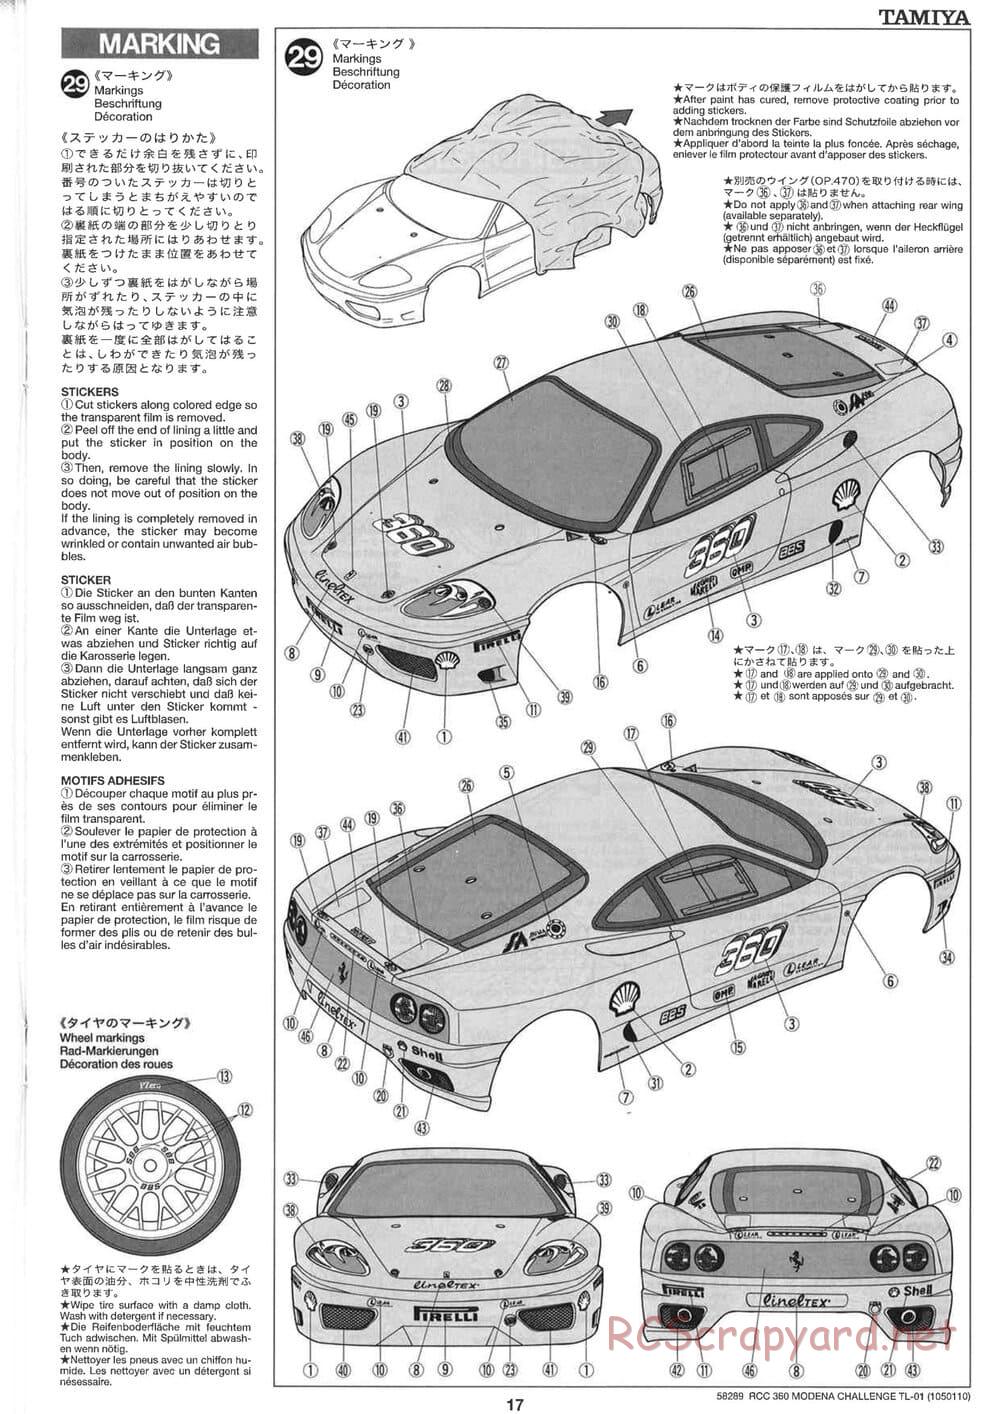 Tamiya - Ferrari 360 Modena Challenge - TL-01 Chassis - Manual - Page 17